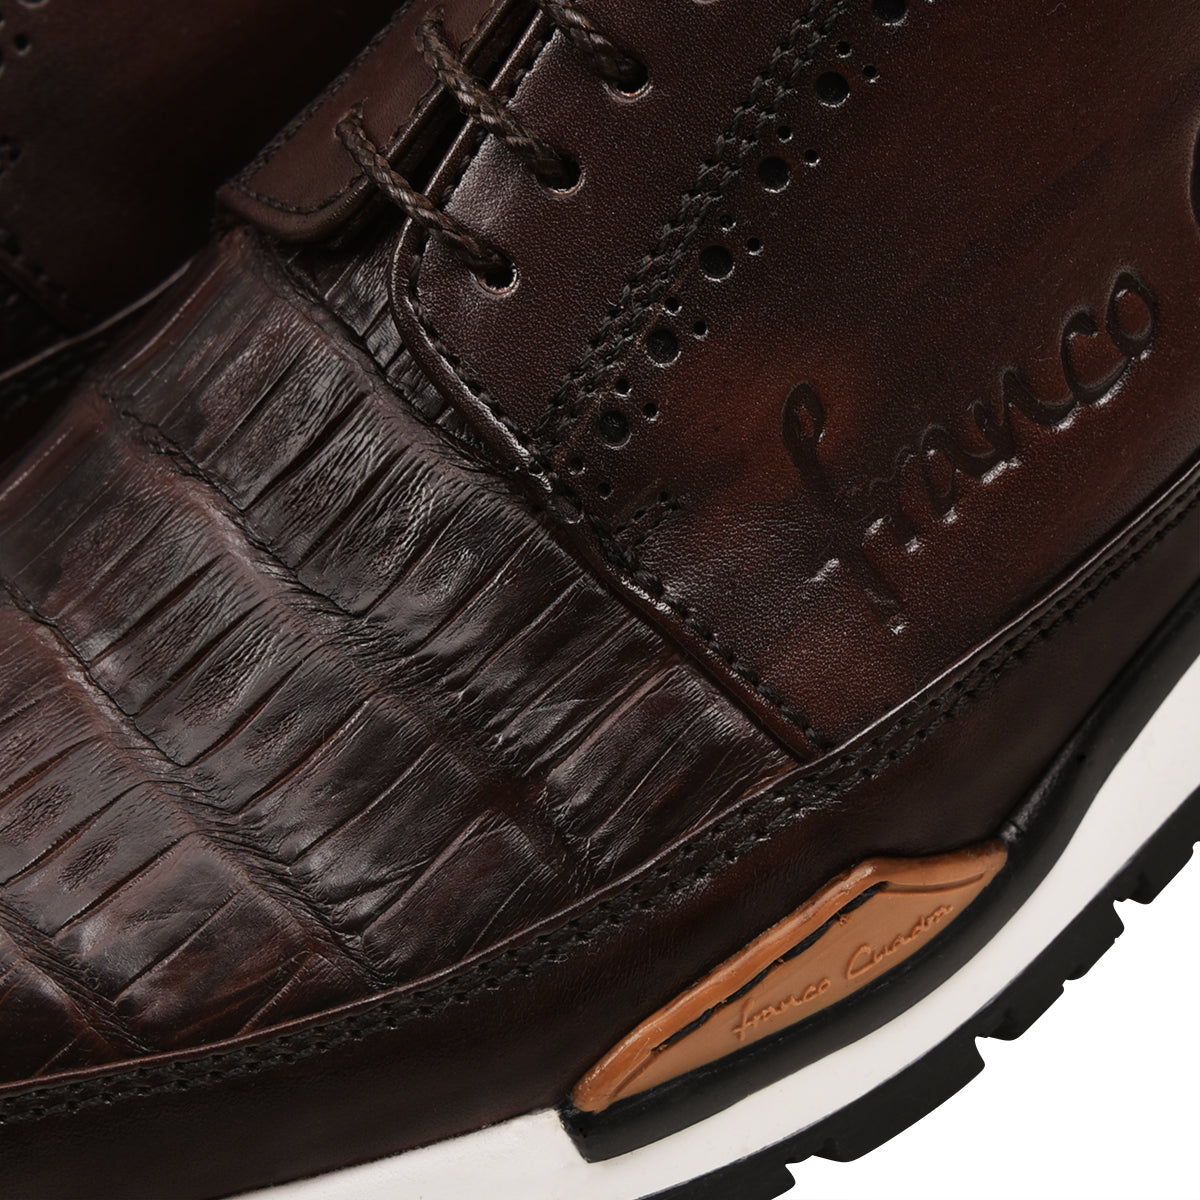 Leather details and subtle Franco cuadra monogram